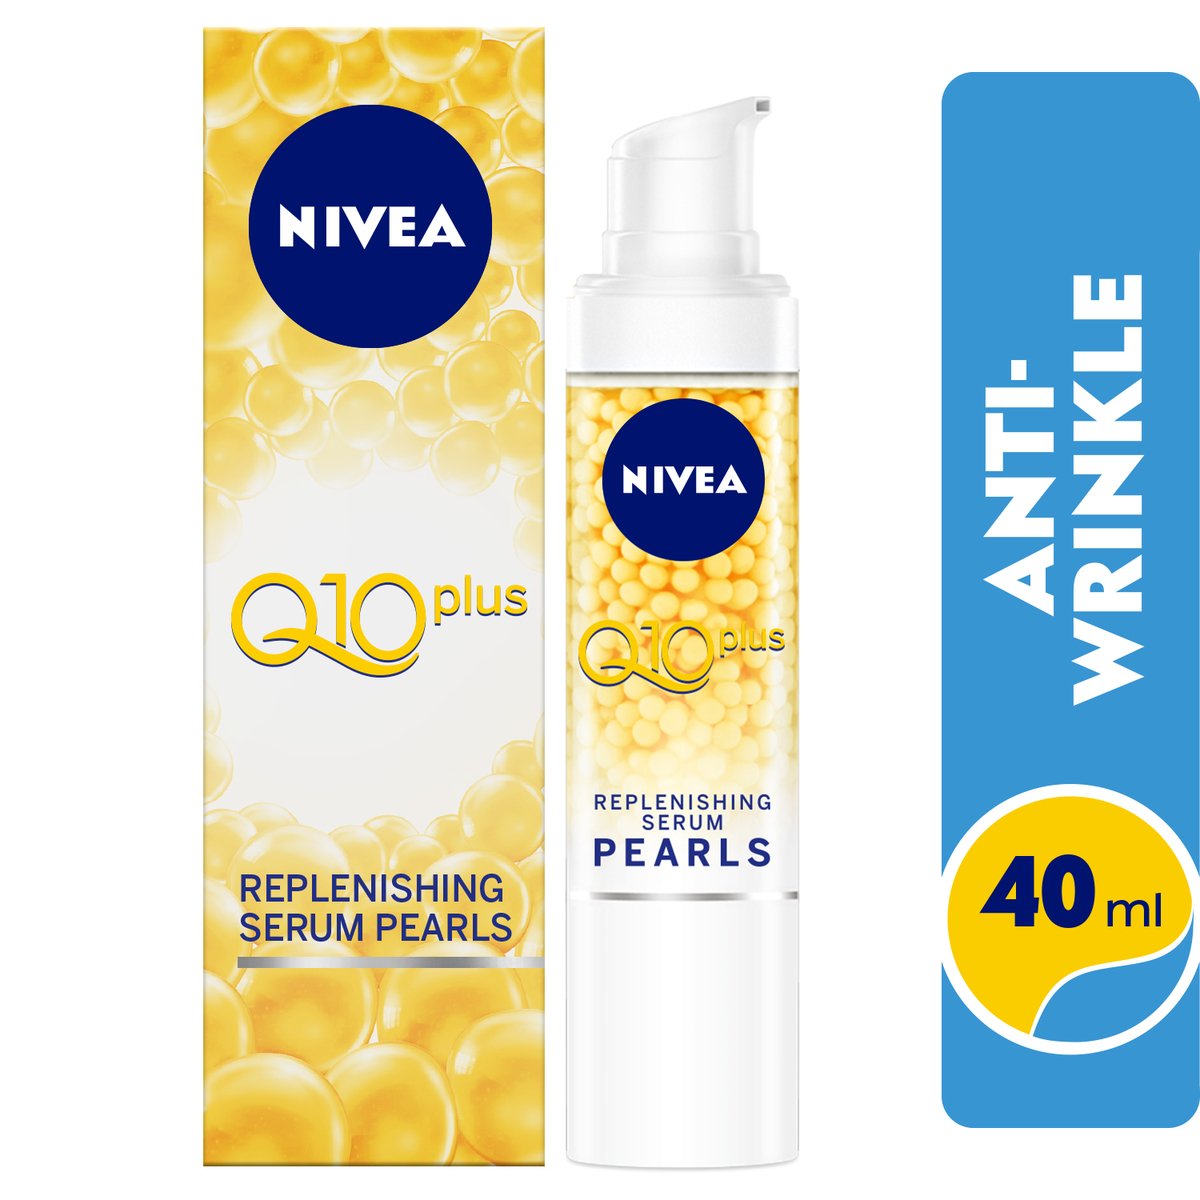 Nivea Face Cream Q10 Plus Anti-wrinkle Replenishing Serum Pearls 40ml